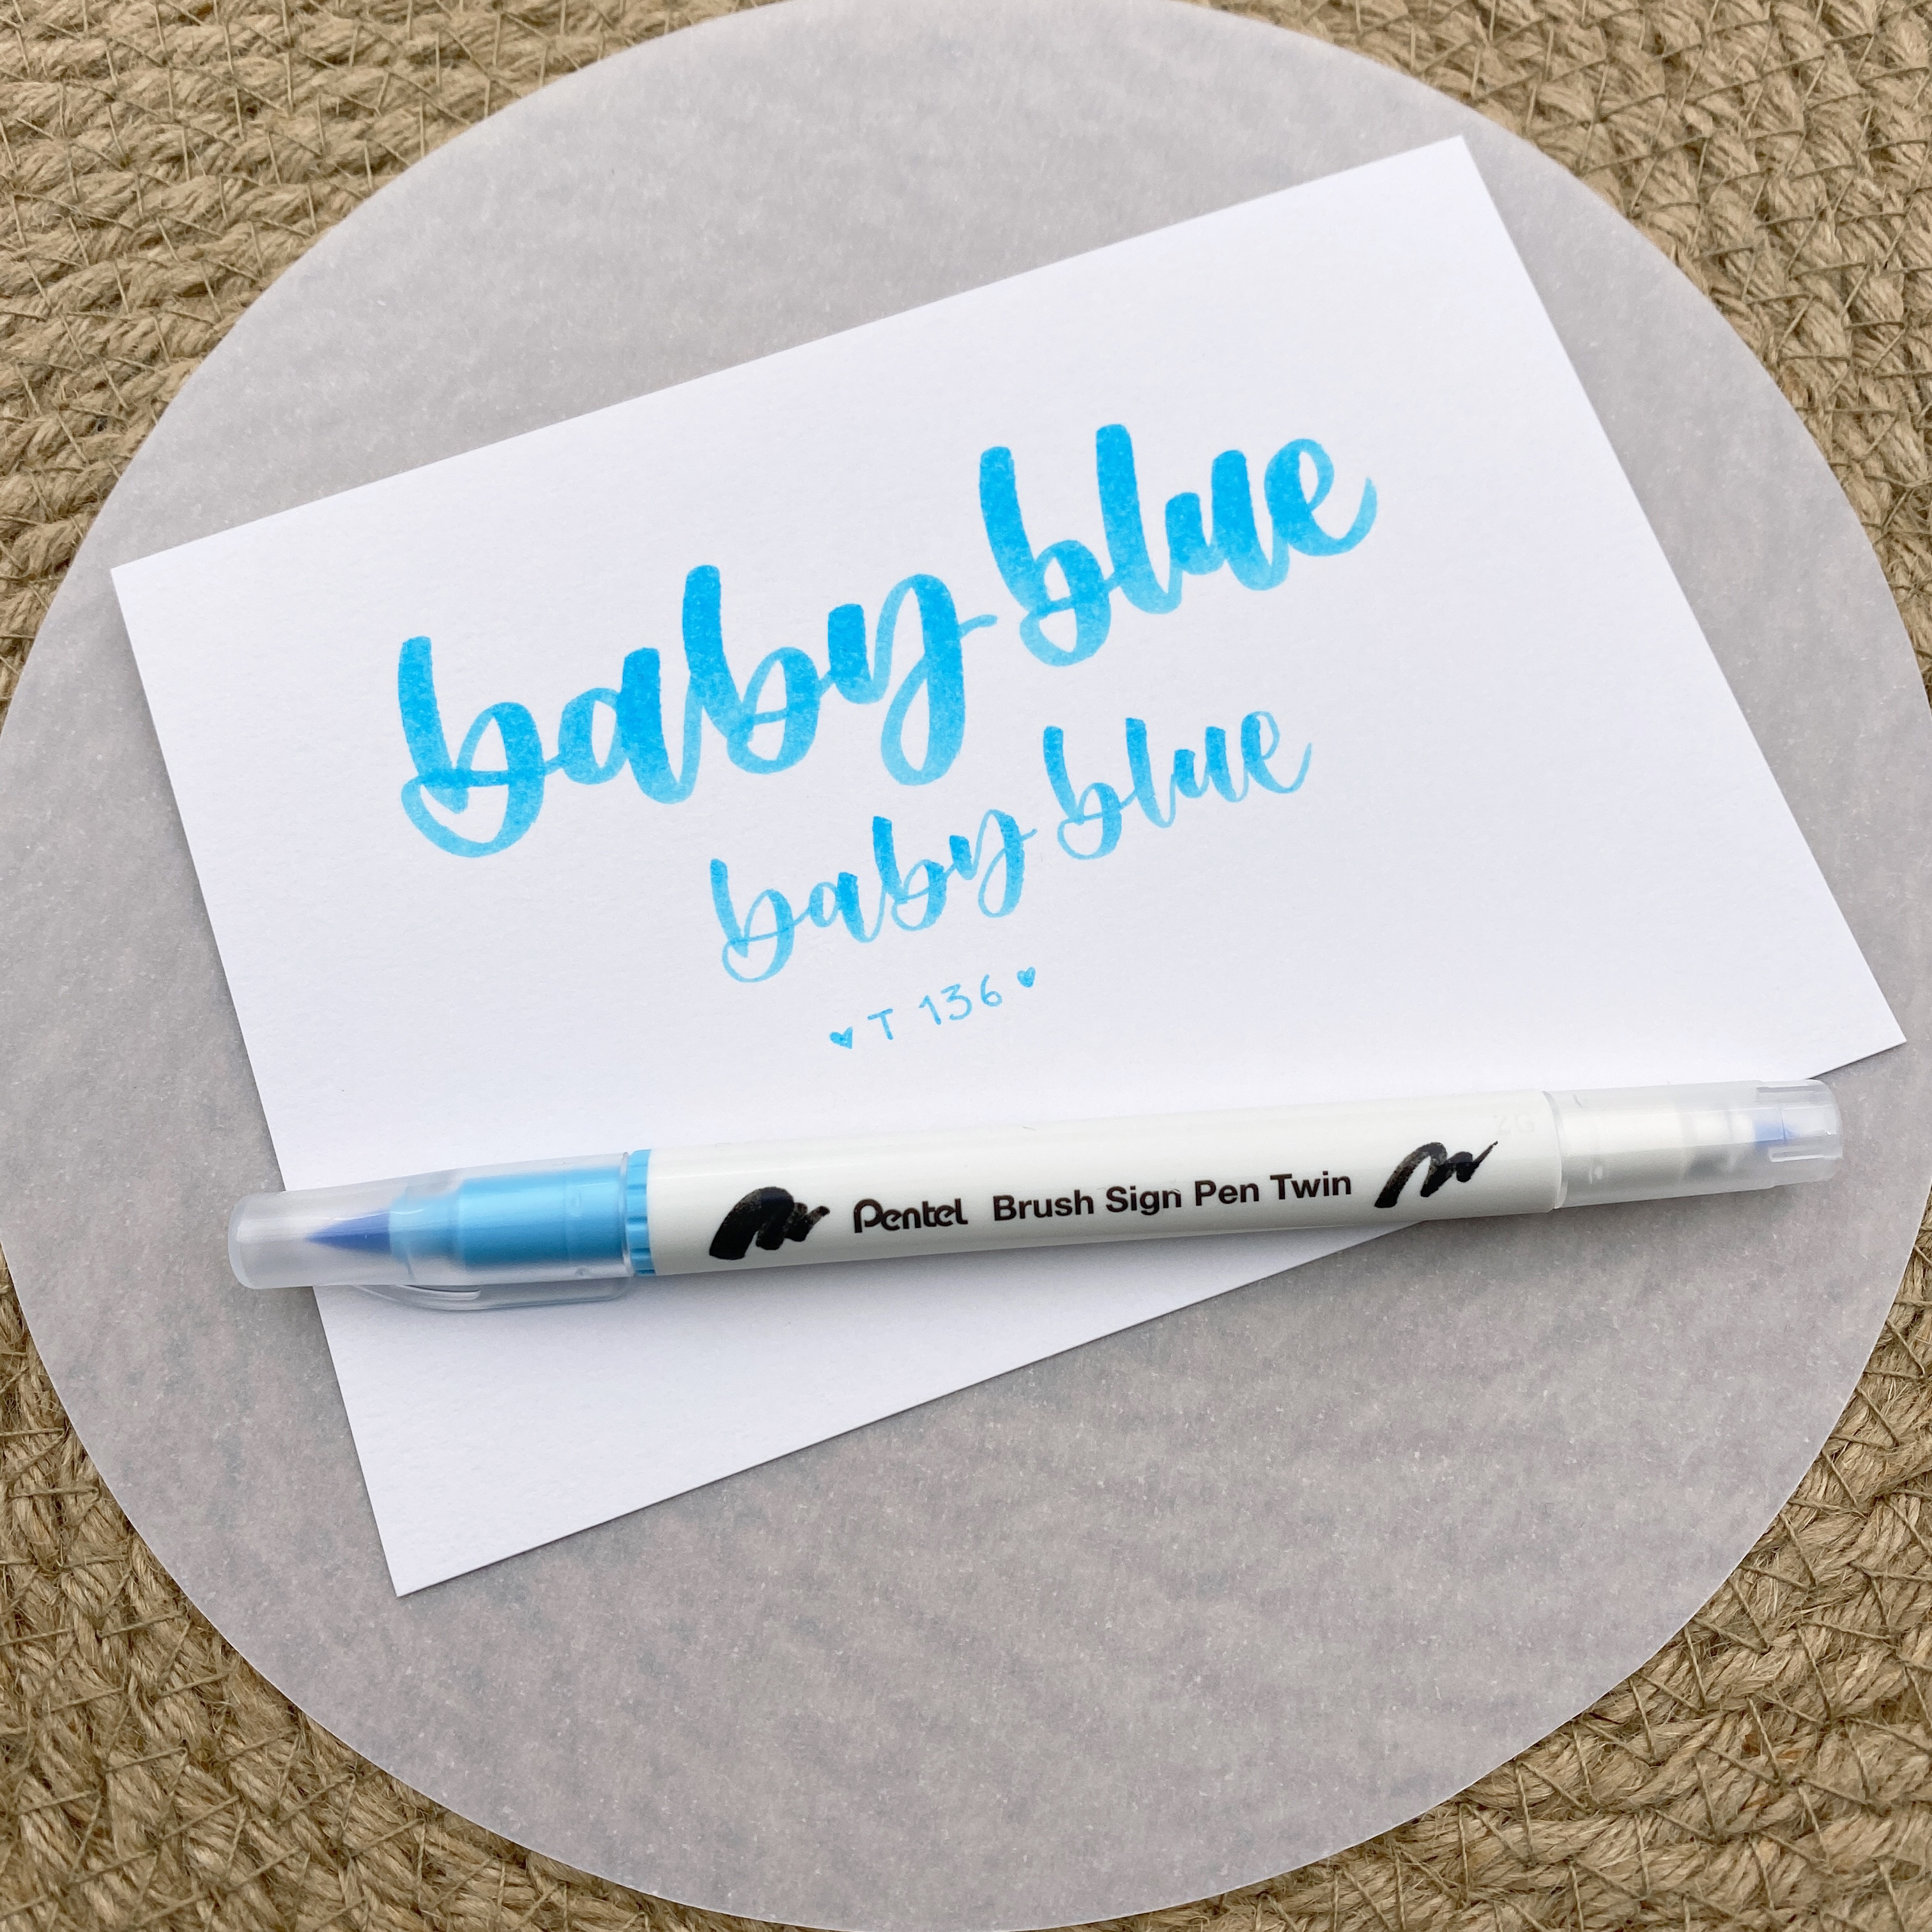 Pentel Brush Sign Pen Twin 136 Baby Blue